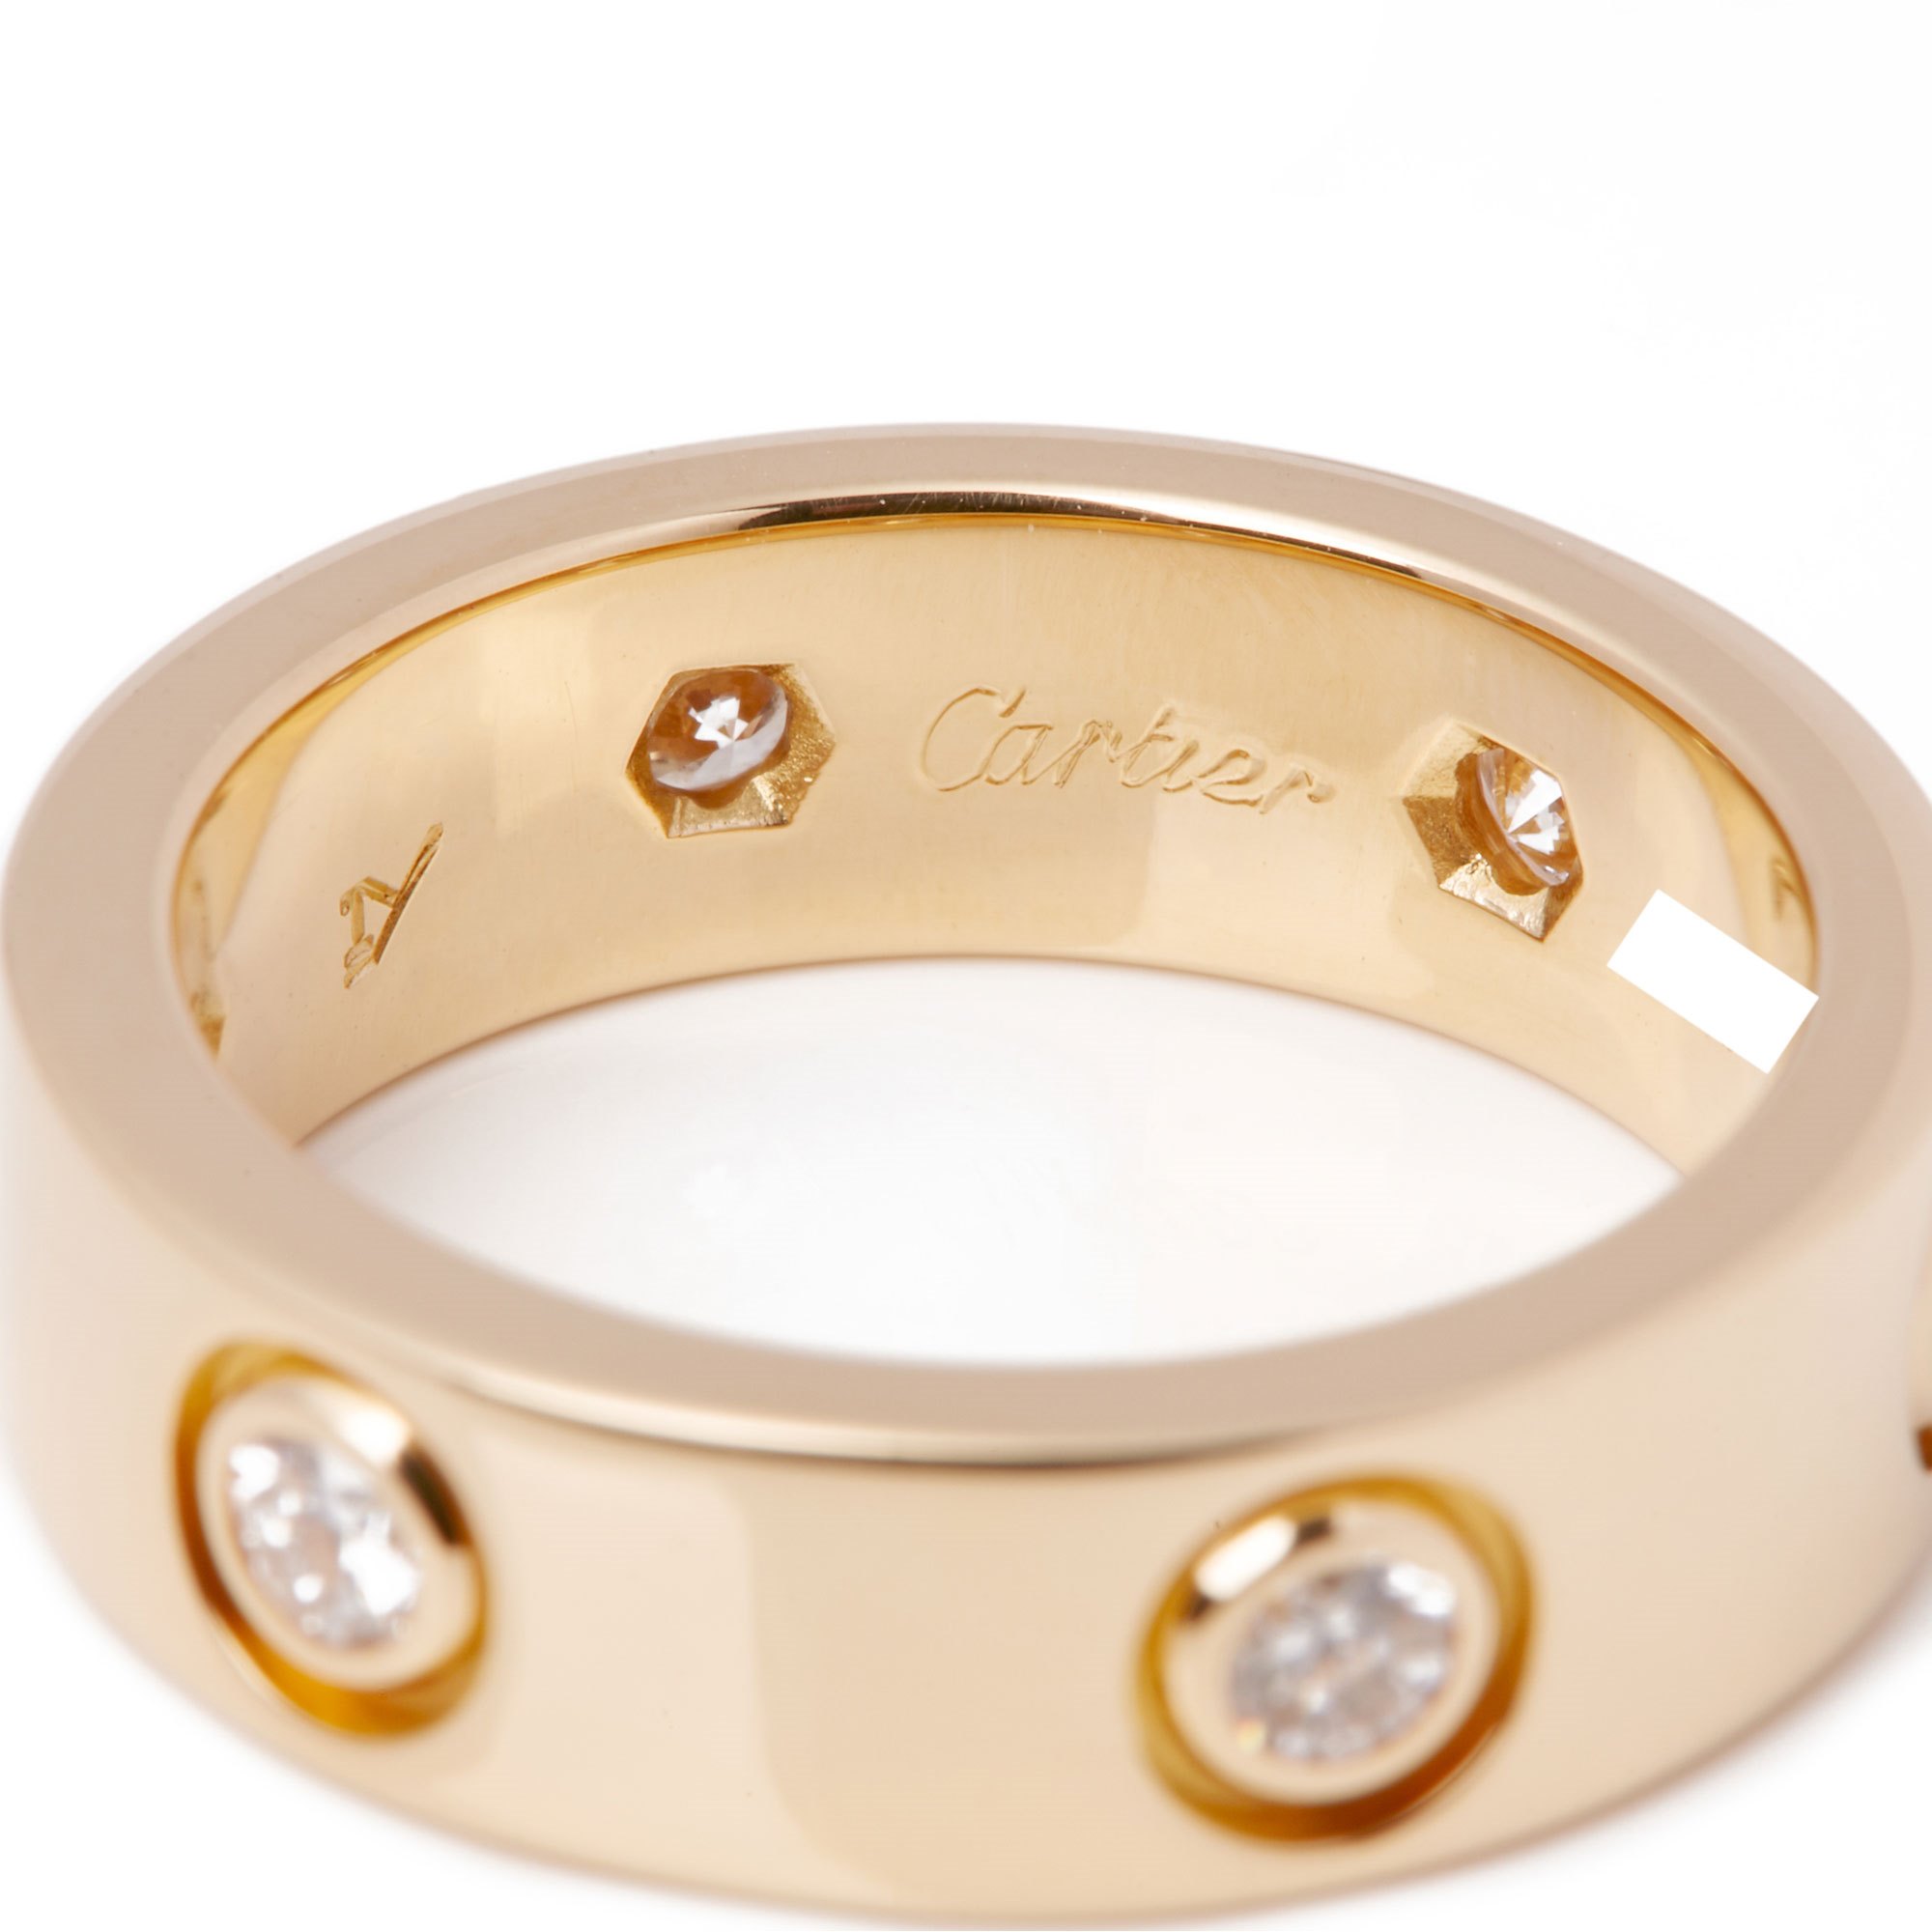 Cartier Love 18ct Yellow Gold Full Diamond Band Ring